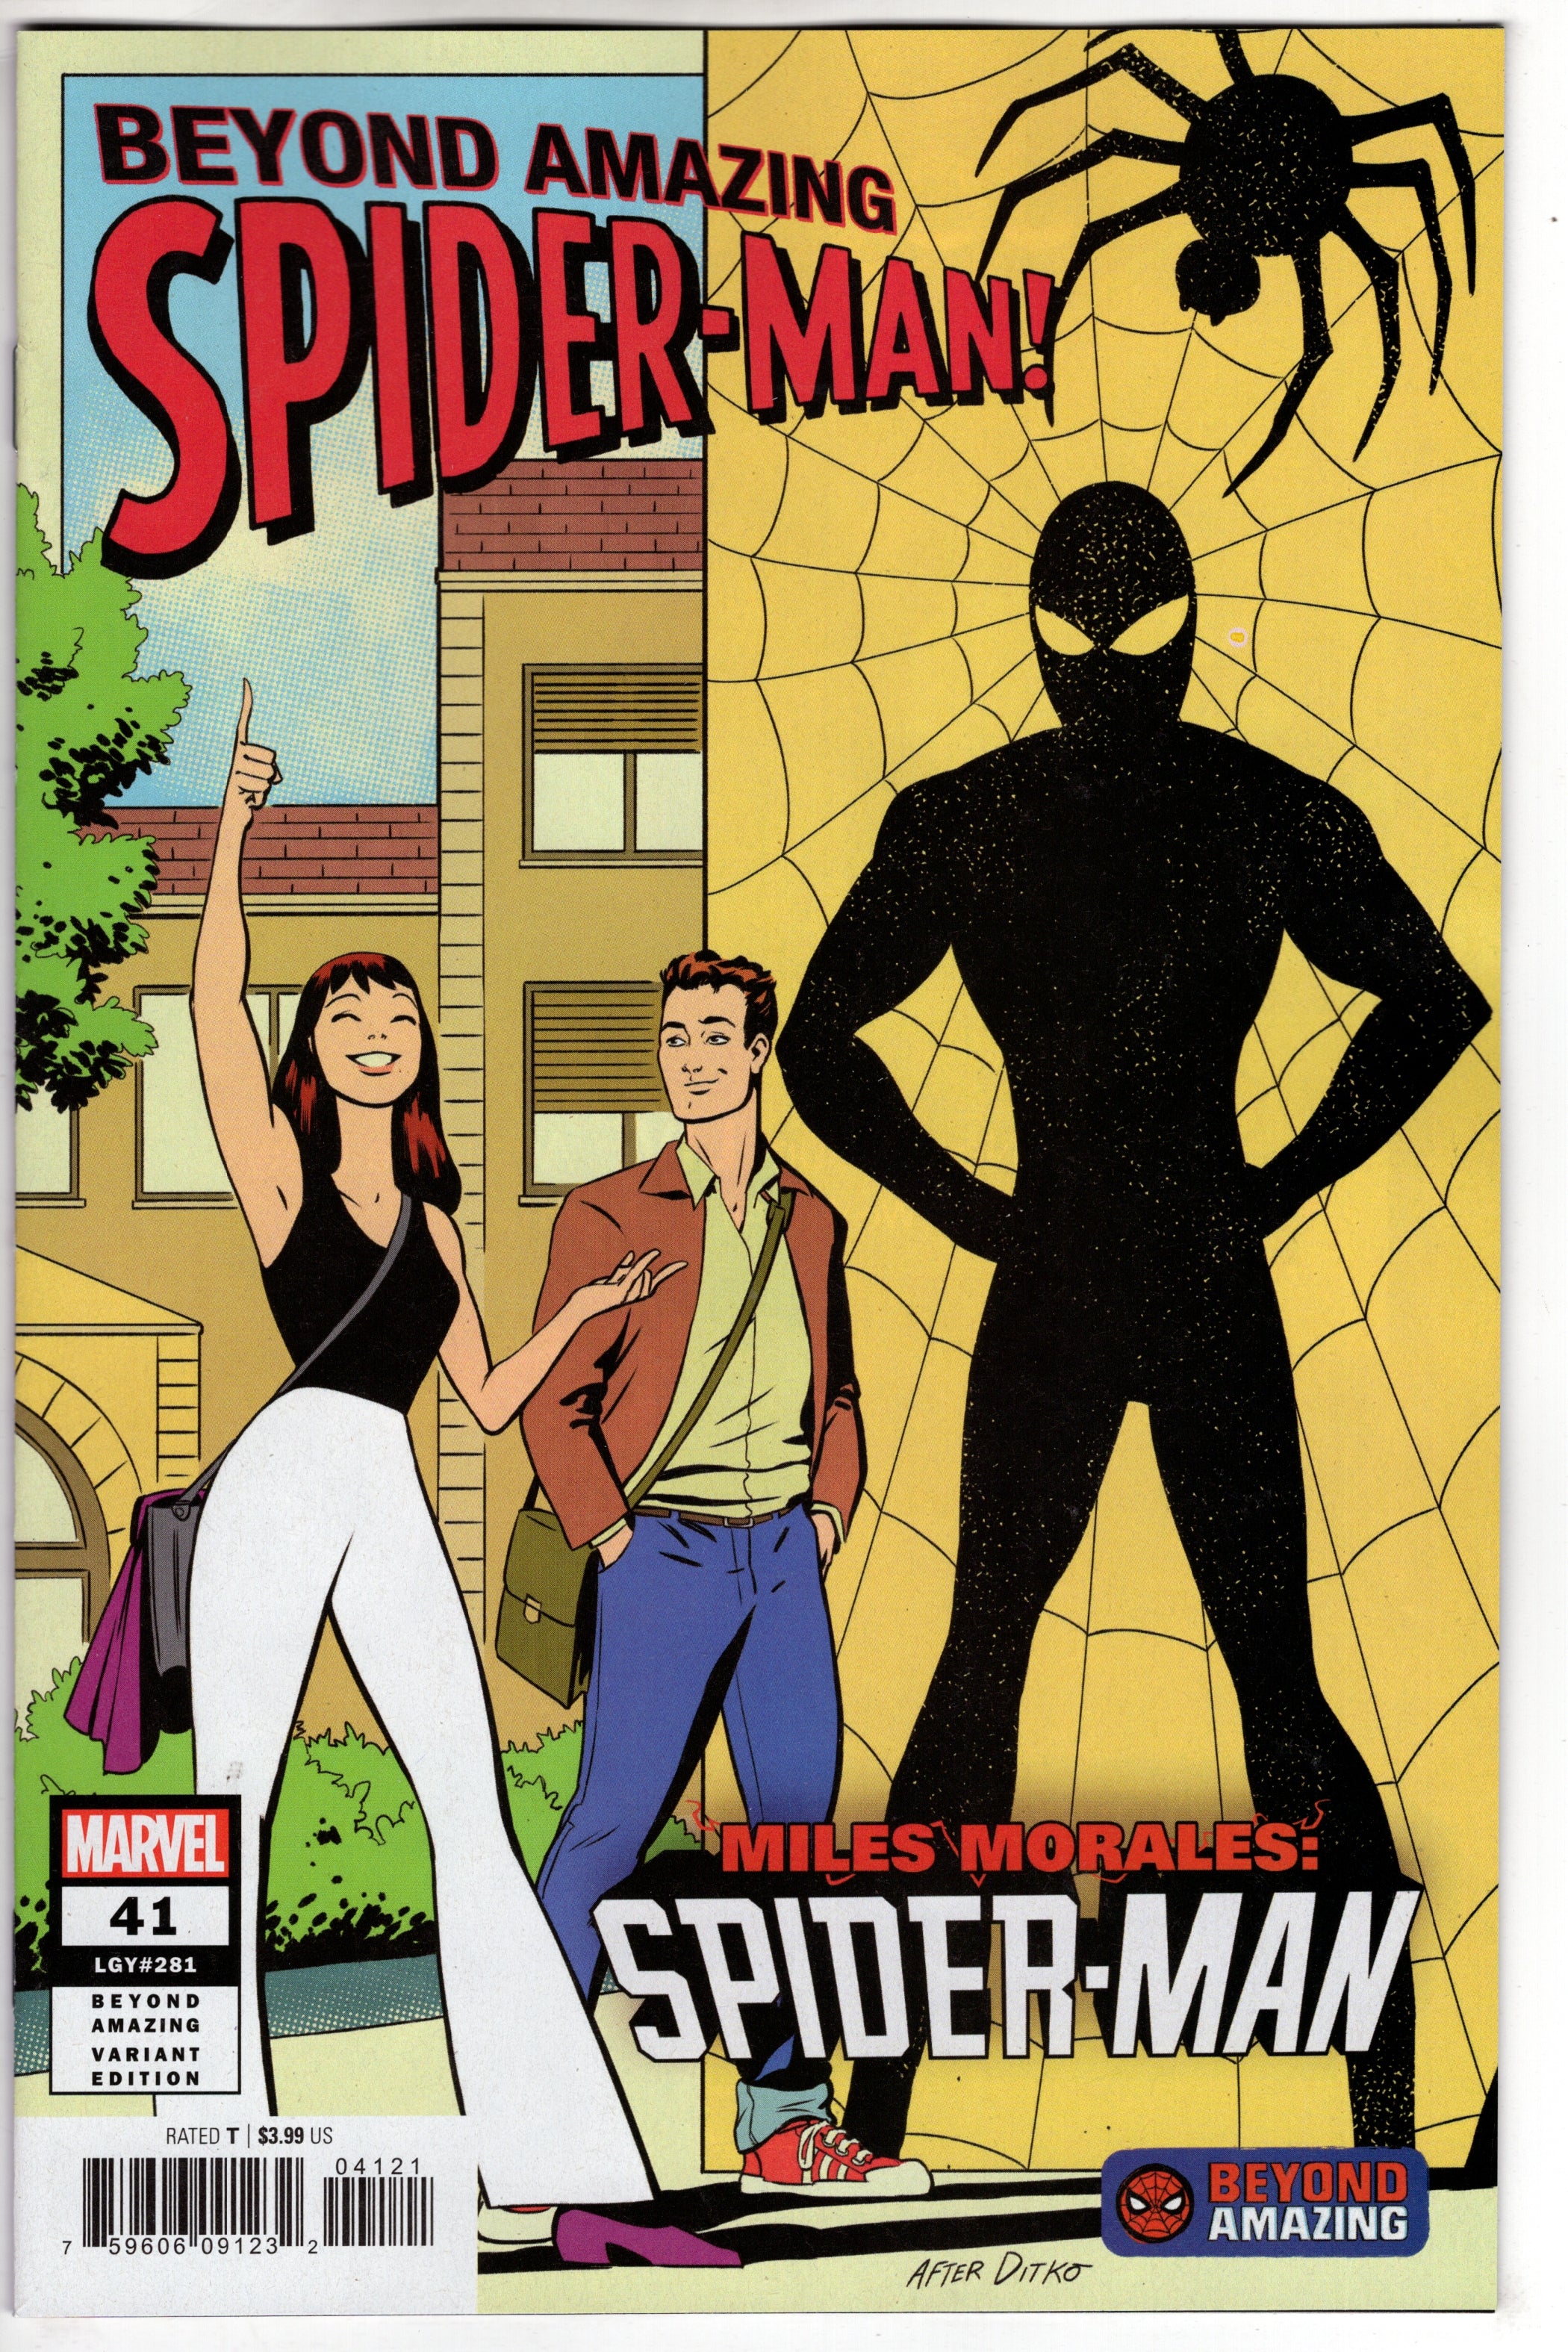 MILES MORALES SPIDER-MAN #41 RODRIGUEZ BEYOND AMZ SPIDER-MAN | Packrat  Comics